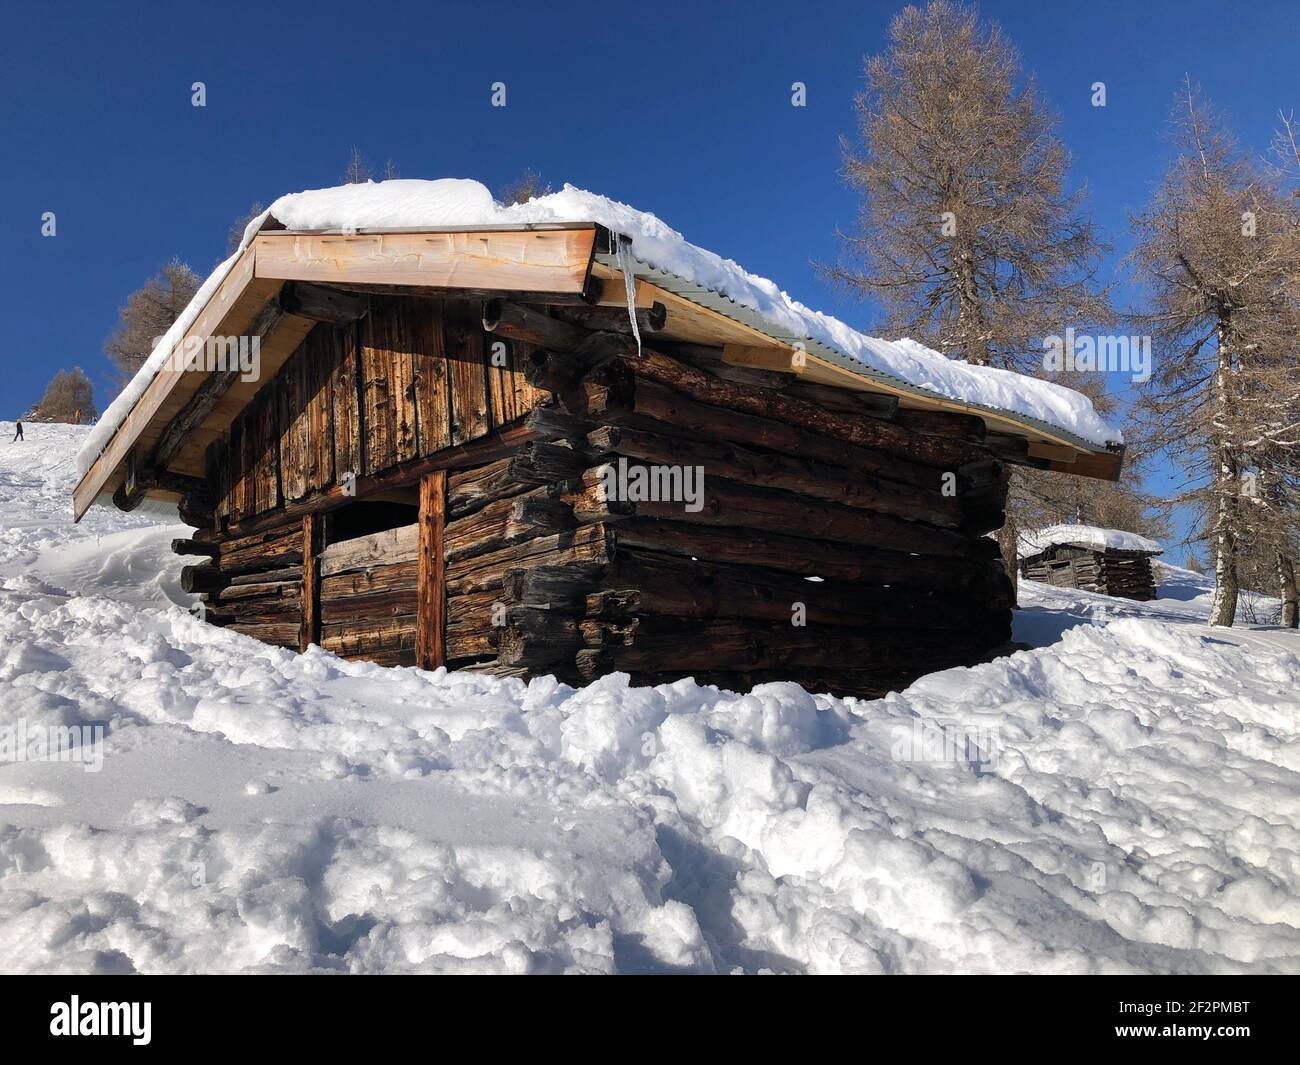 Snow-covered Holzstadel, Bergeralm ski area, winter landscape, nature, Wipptal, Brenner Pass, Innsbruck, Steinach am Brenner, Tyrol, Austria Stock Photo